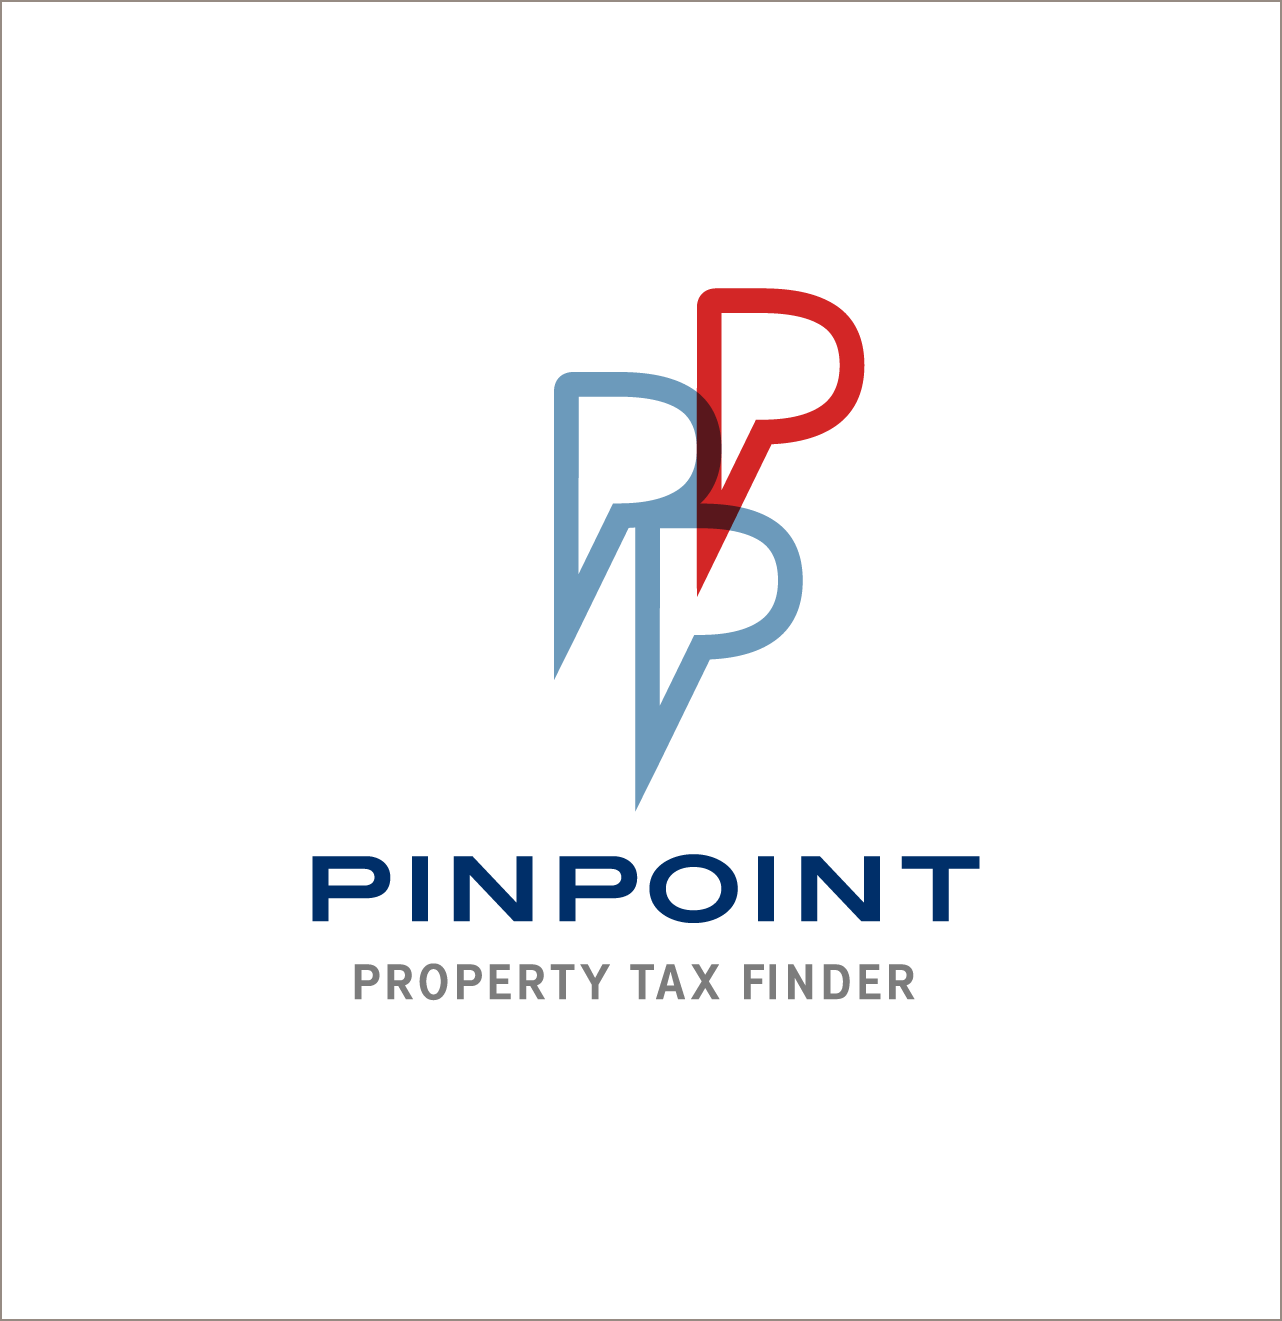 Pinpoint logo